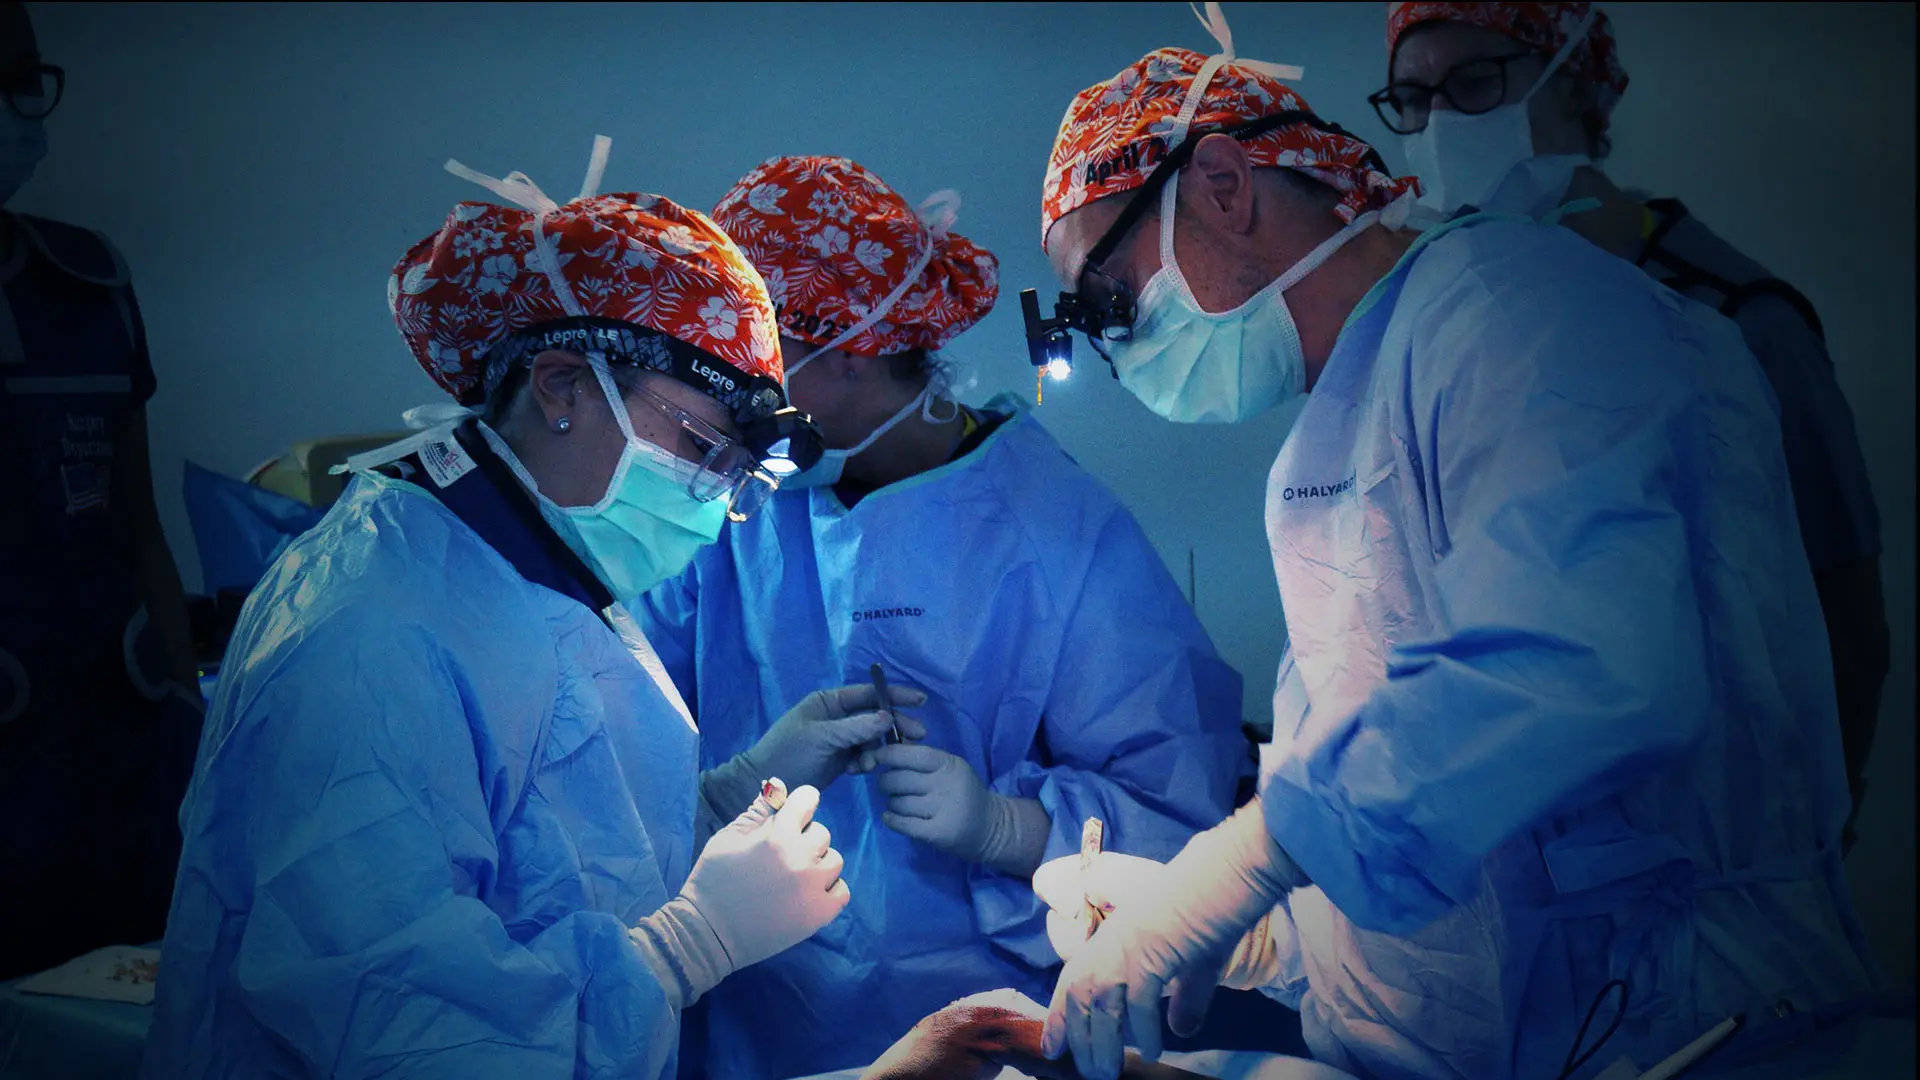 For One Mount Sinai Orthopedist, Humanitarian Work Has Its Own Reward 